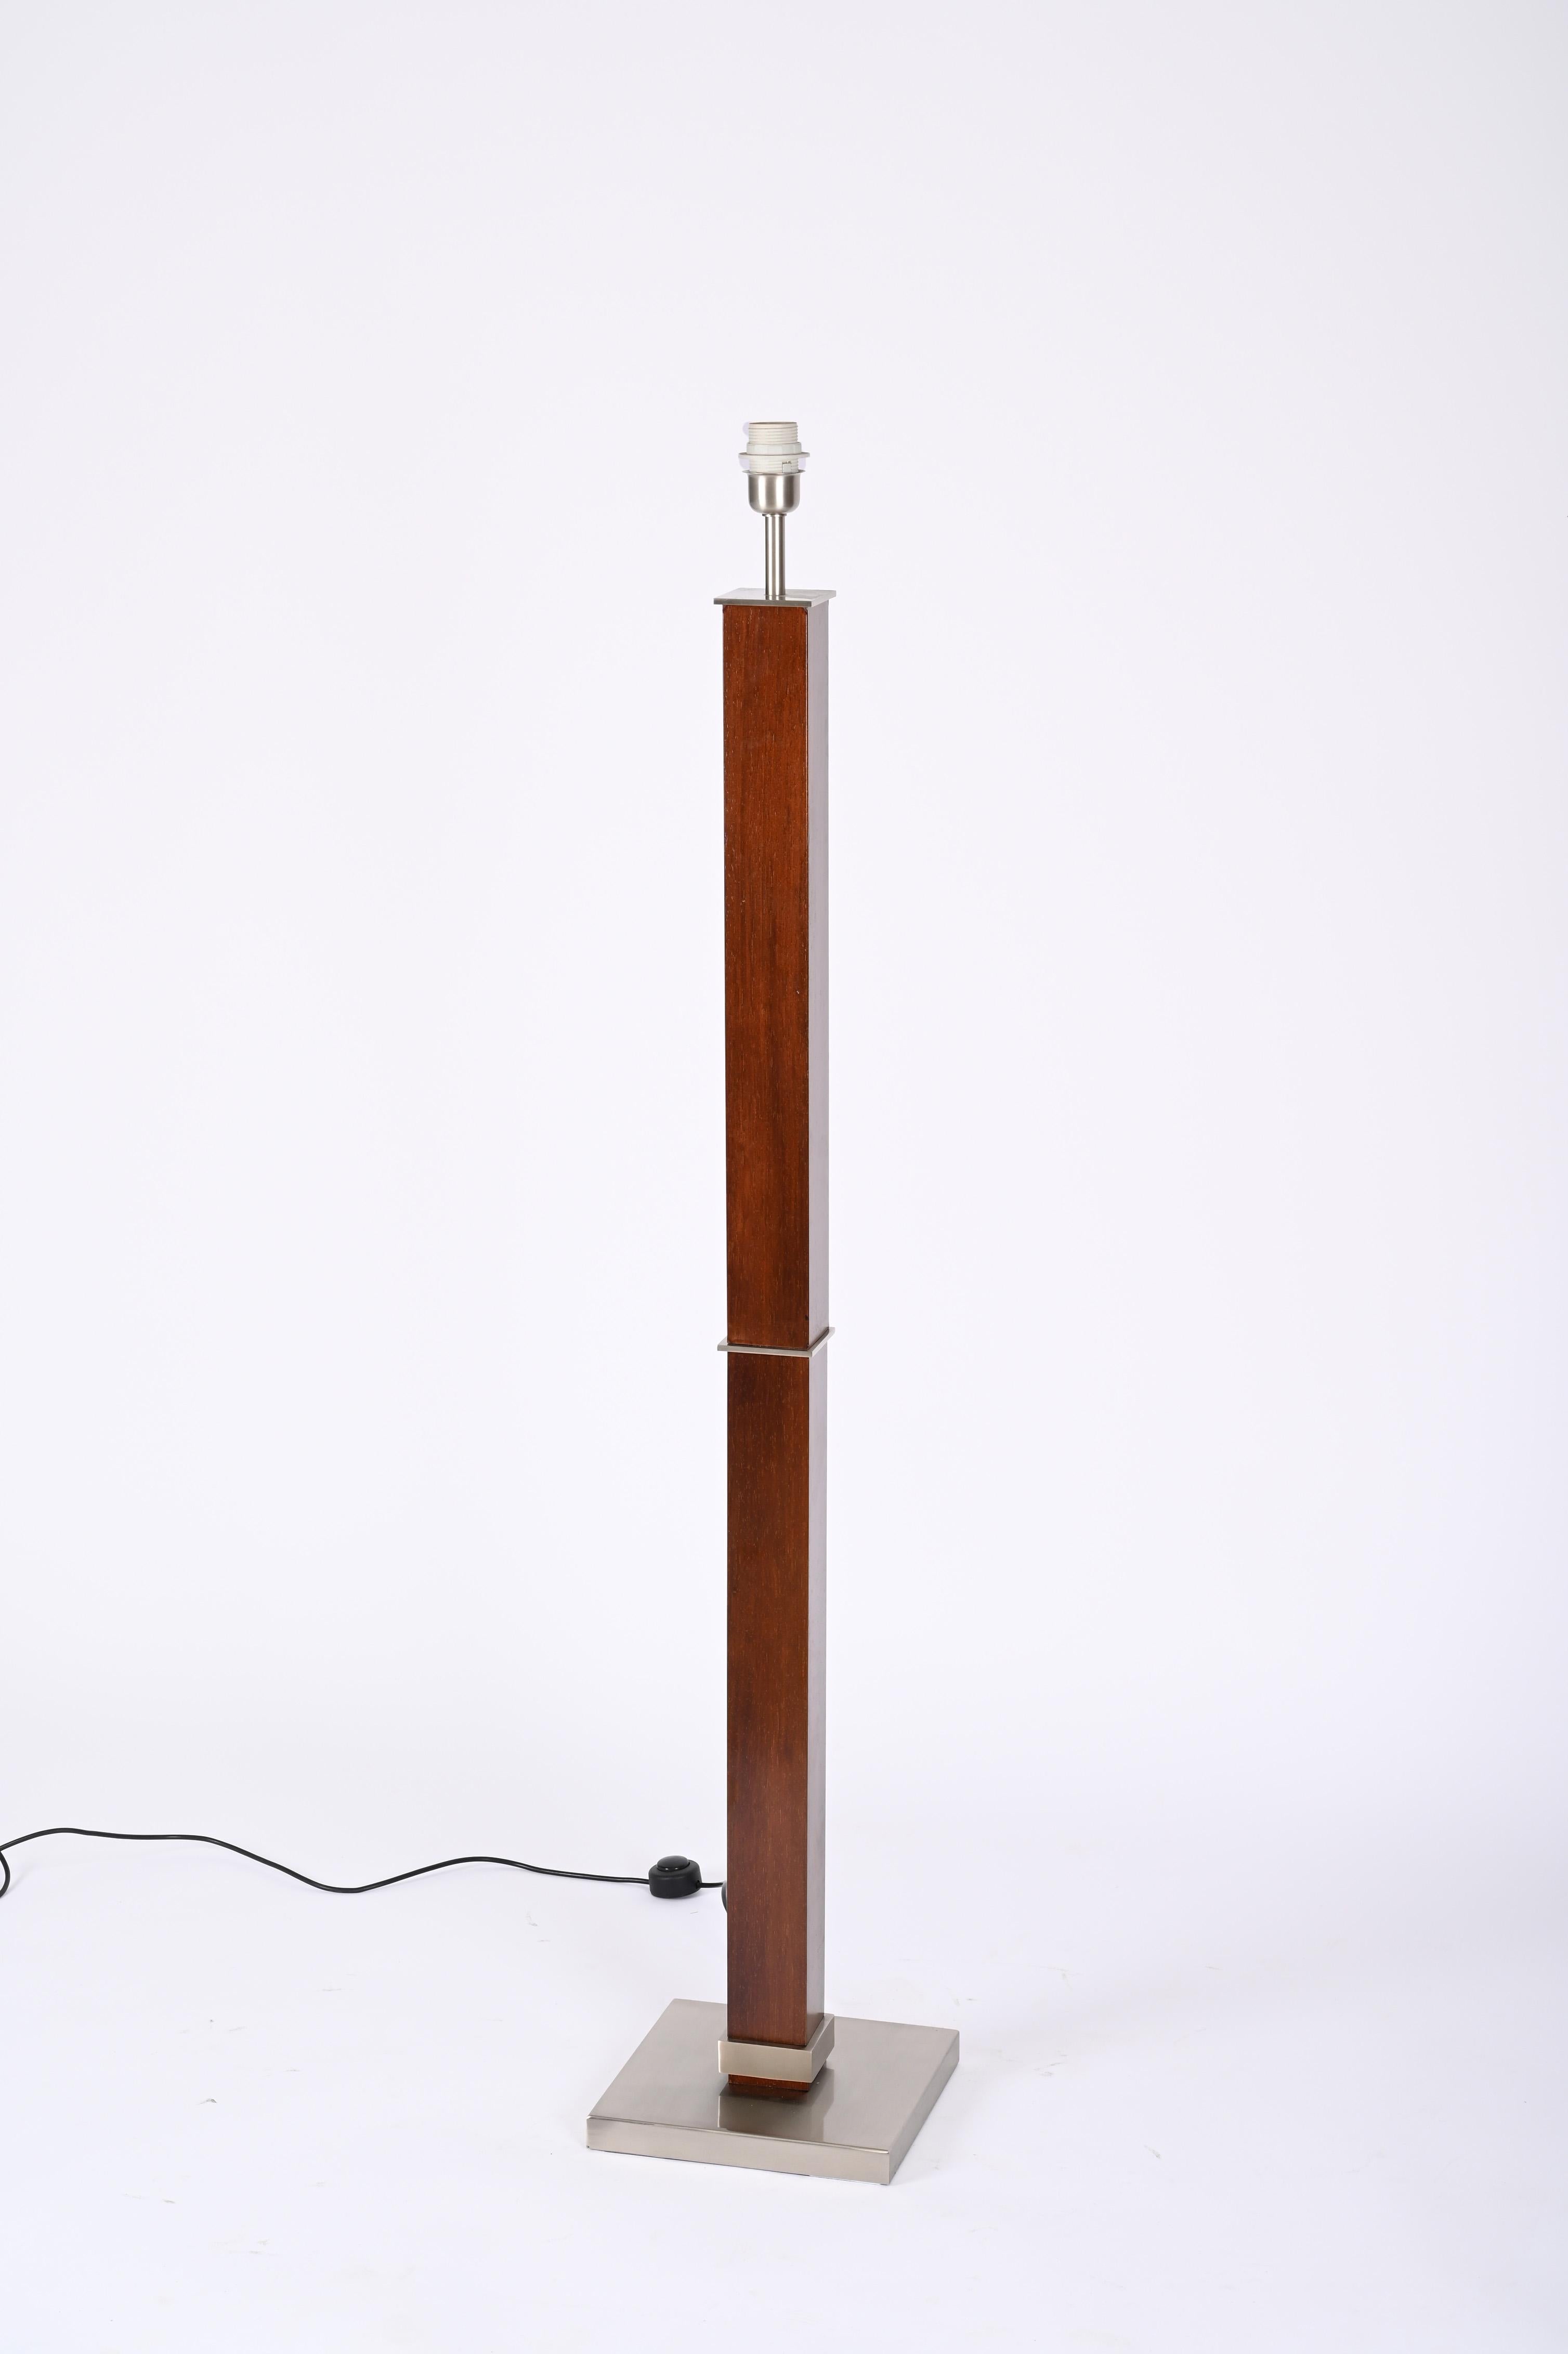 Zonca Voghera Minimal Midcentury Italian Wood and Steel Floor Lamp, 1980s For Sale 4